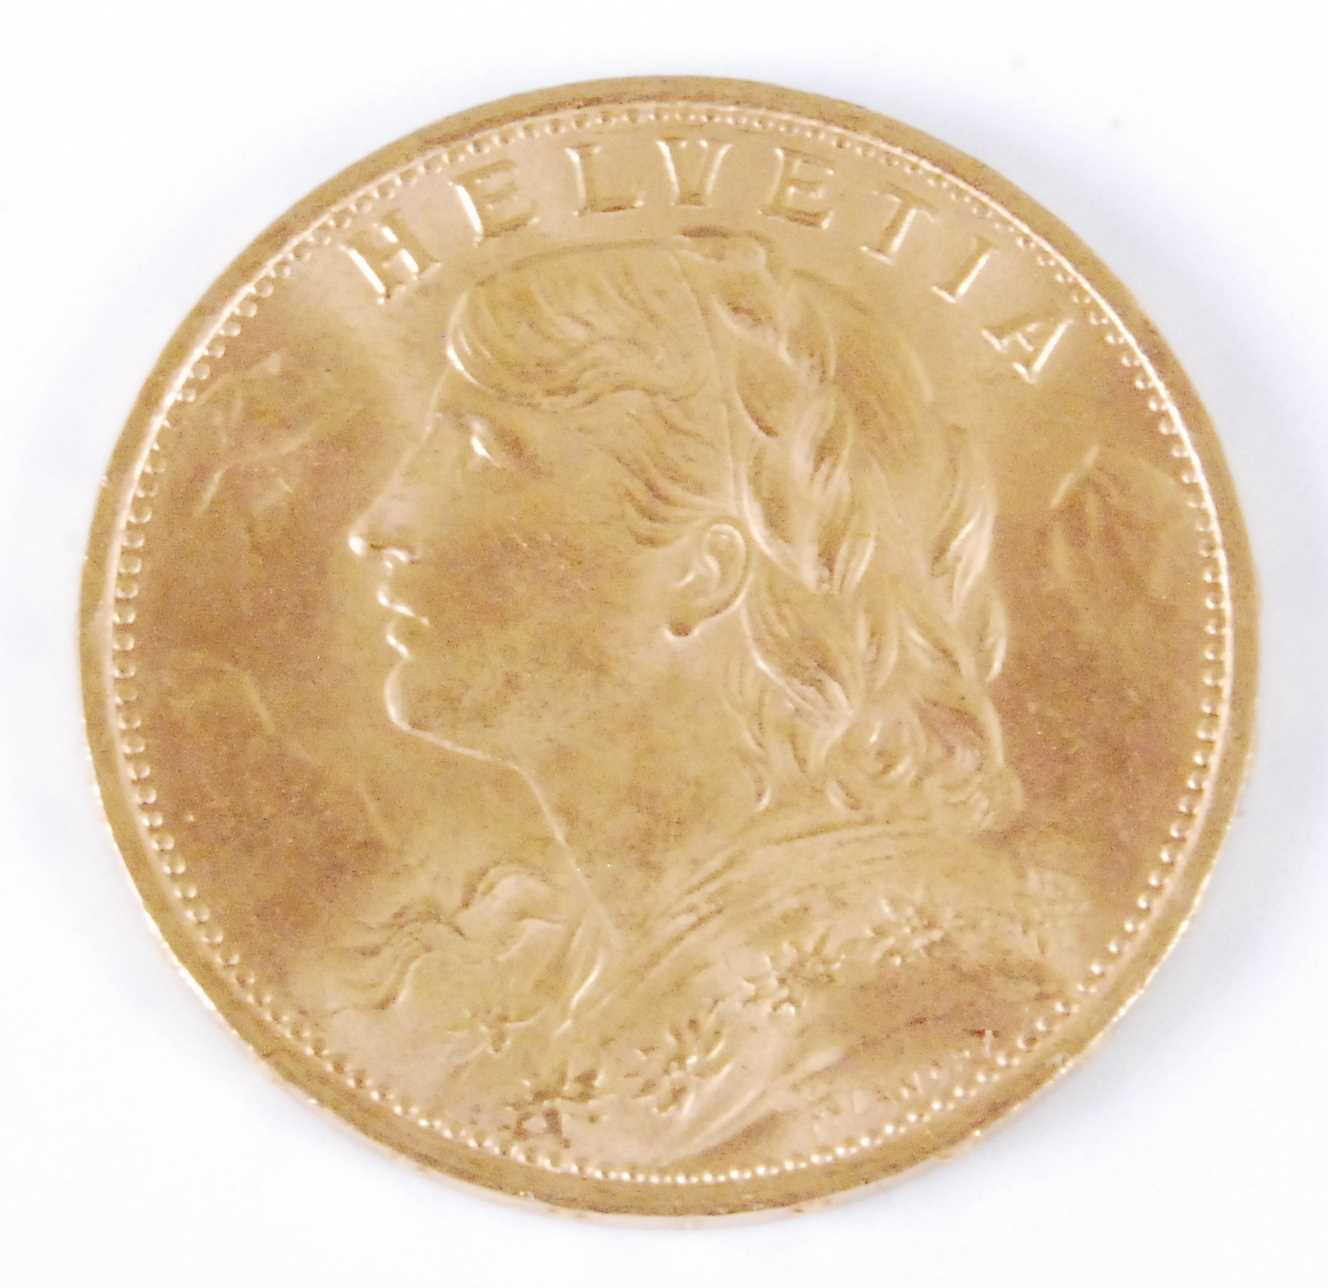 Lot 2047 - Switzerland, 1922 gold 20 francs